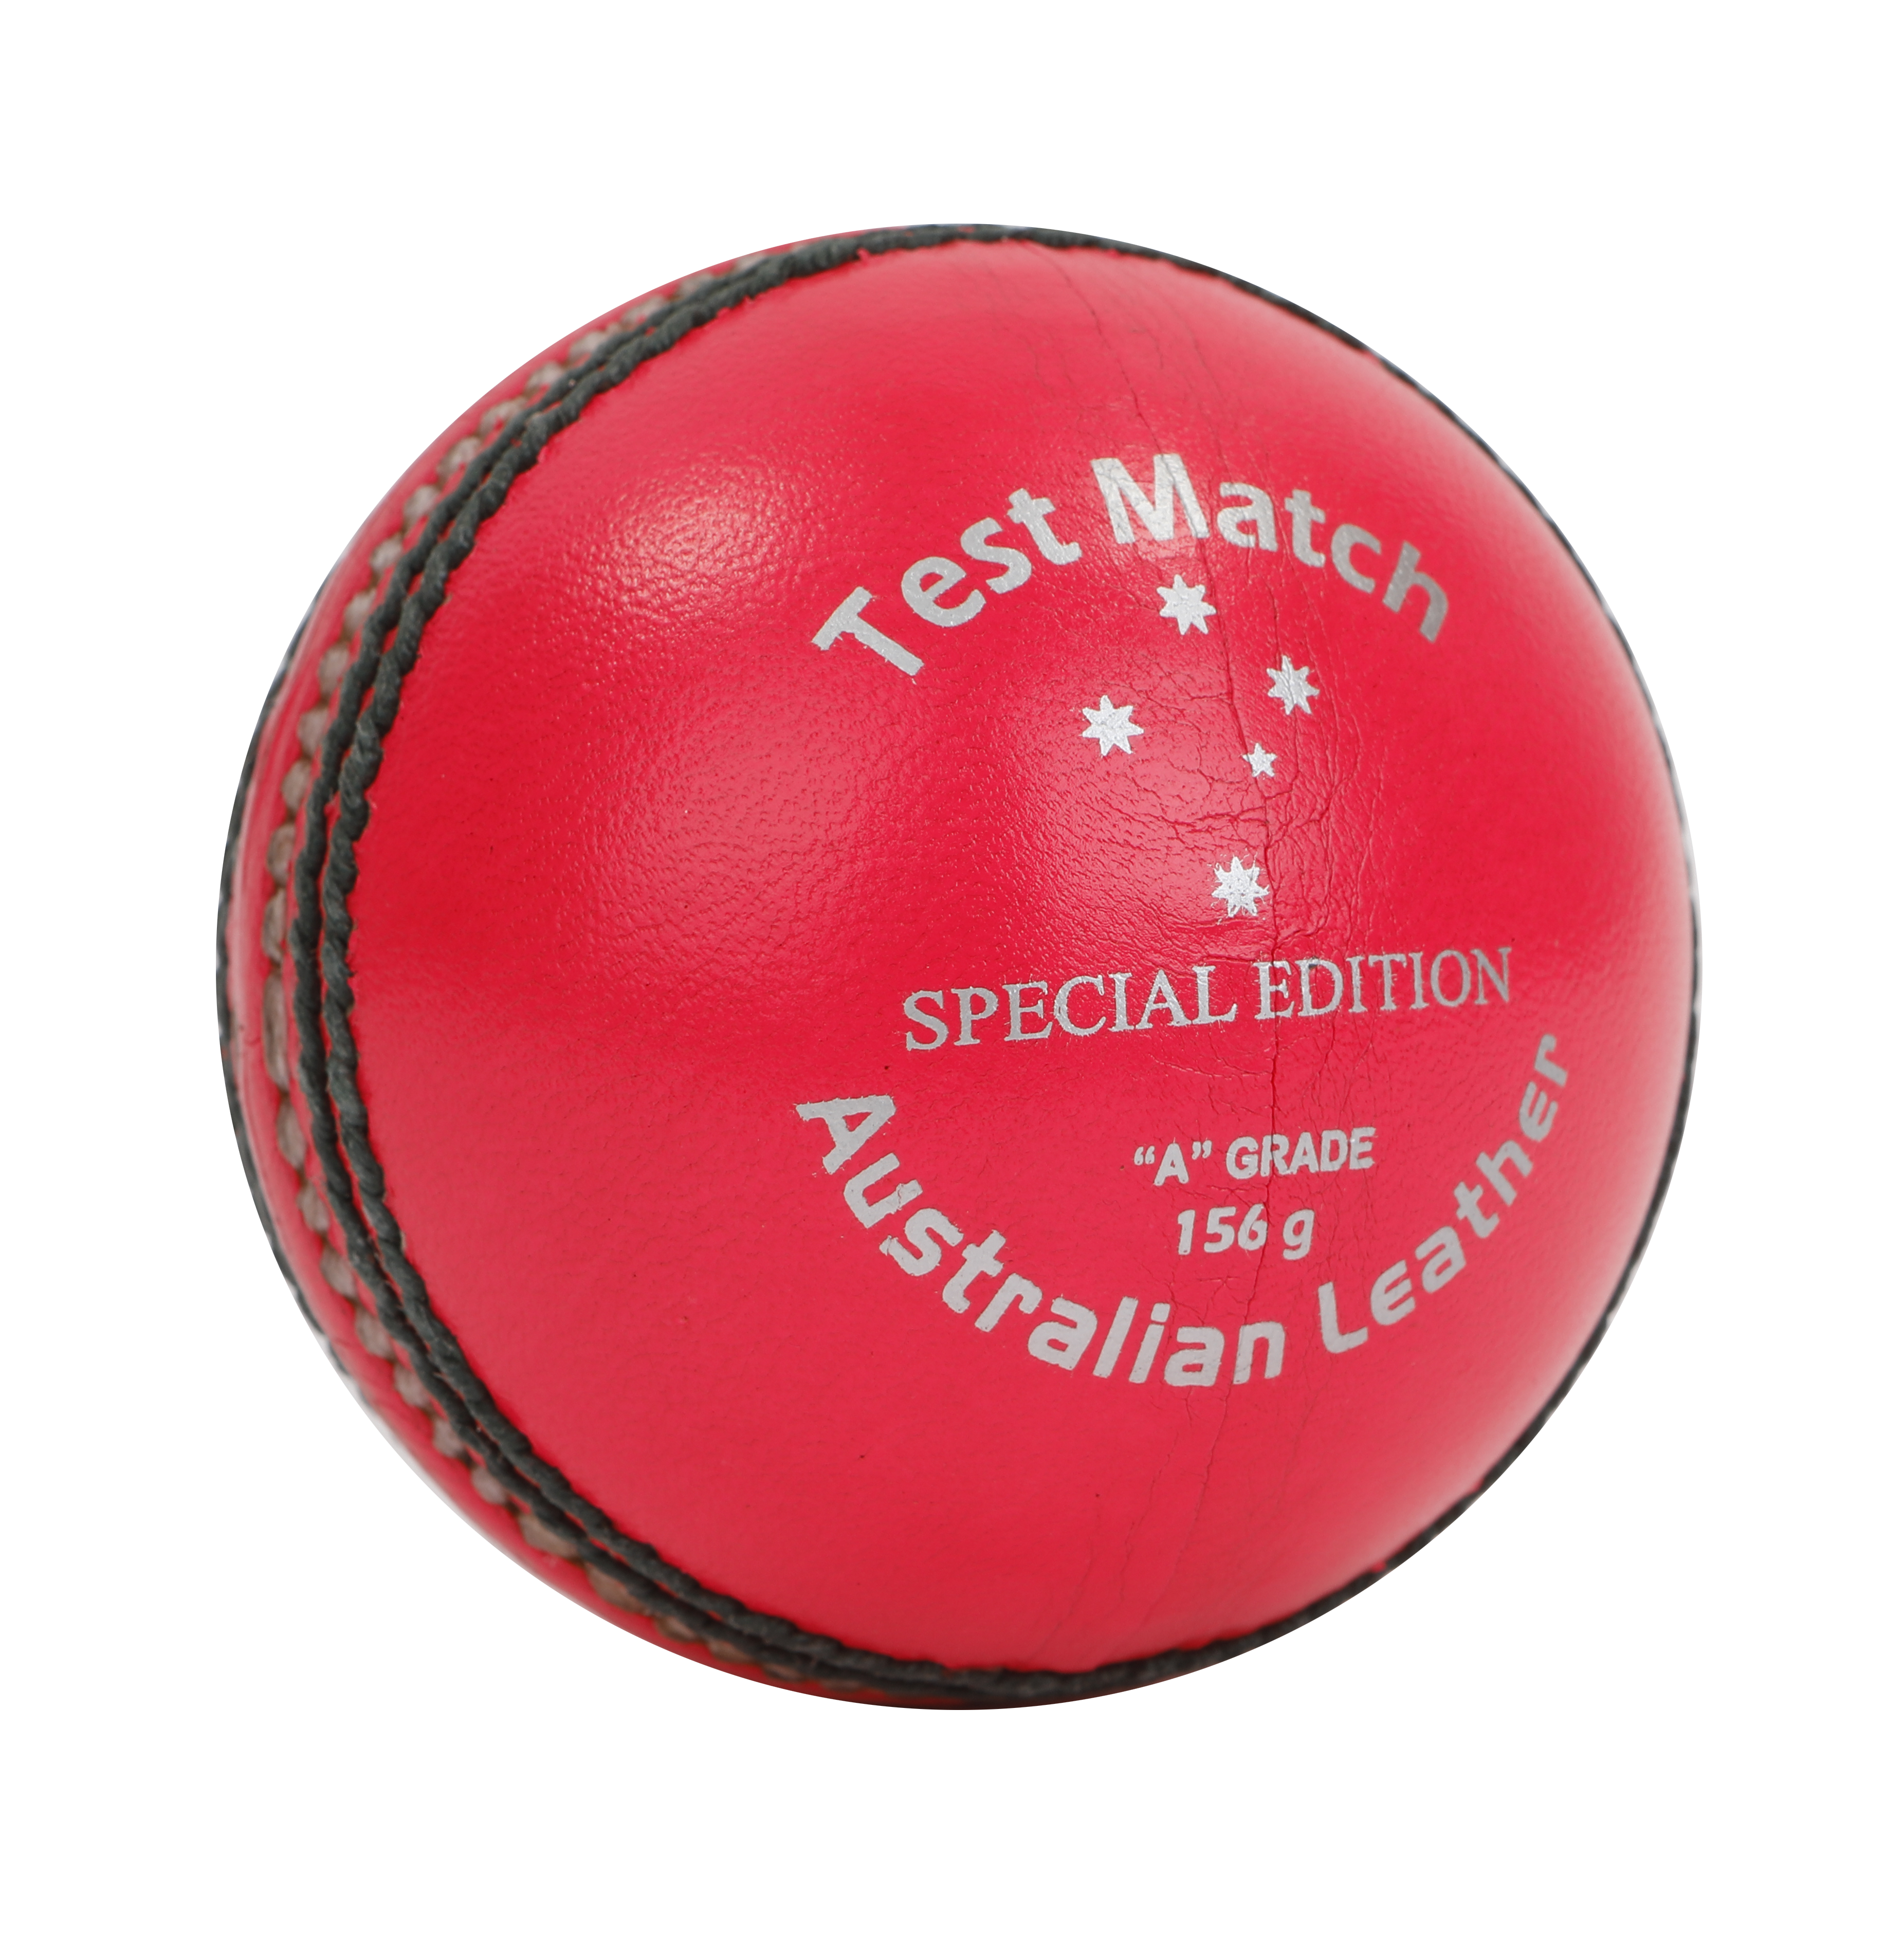 OneX_Unisex Cricket Ball Pink Hand Stitched Leather cricket Balls Test Match 